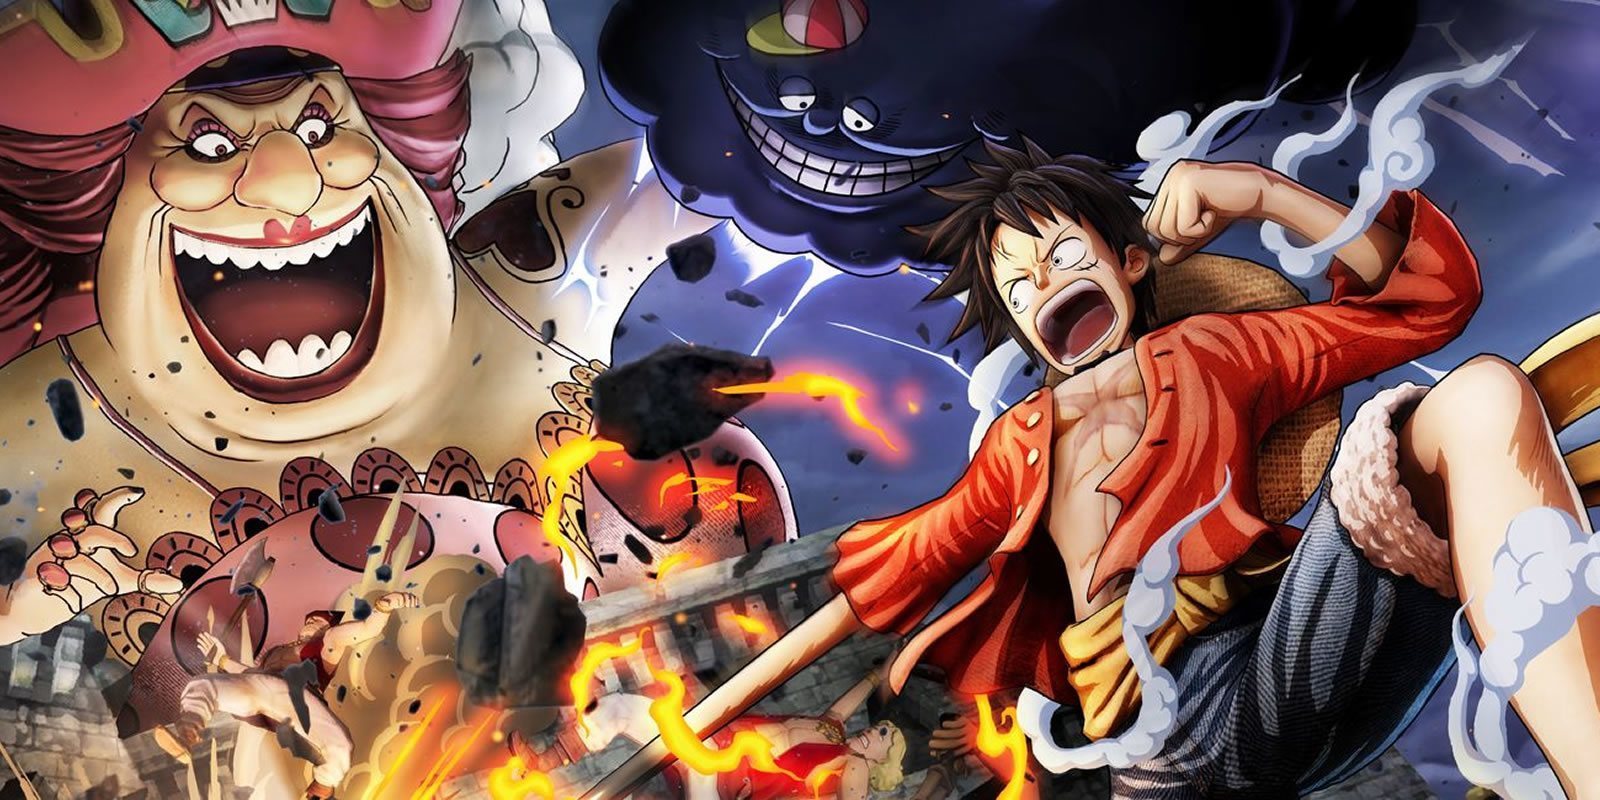 Se detallan los extras por reservar 'One Piece: Pirate Warriors 4'